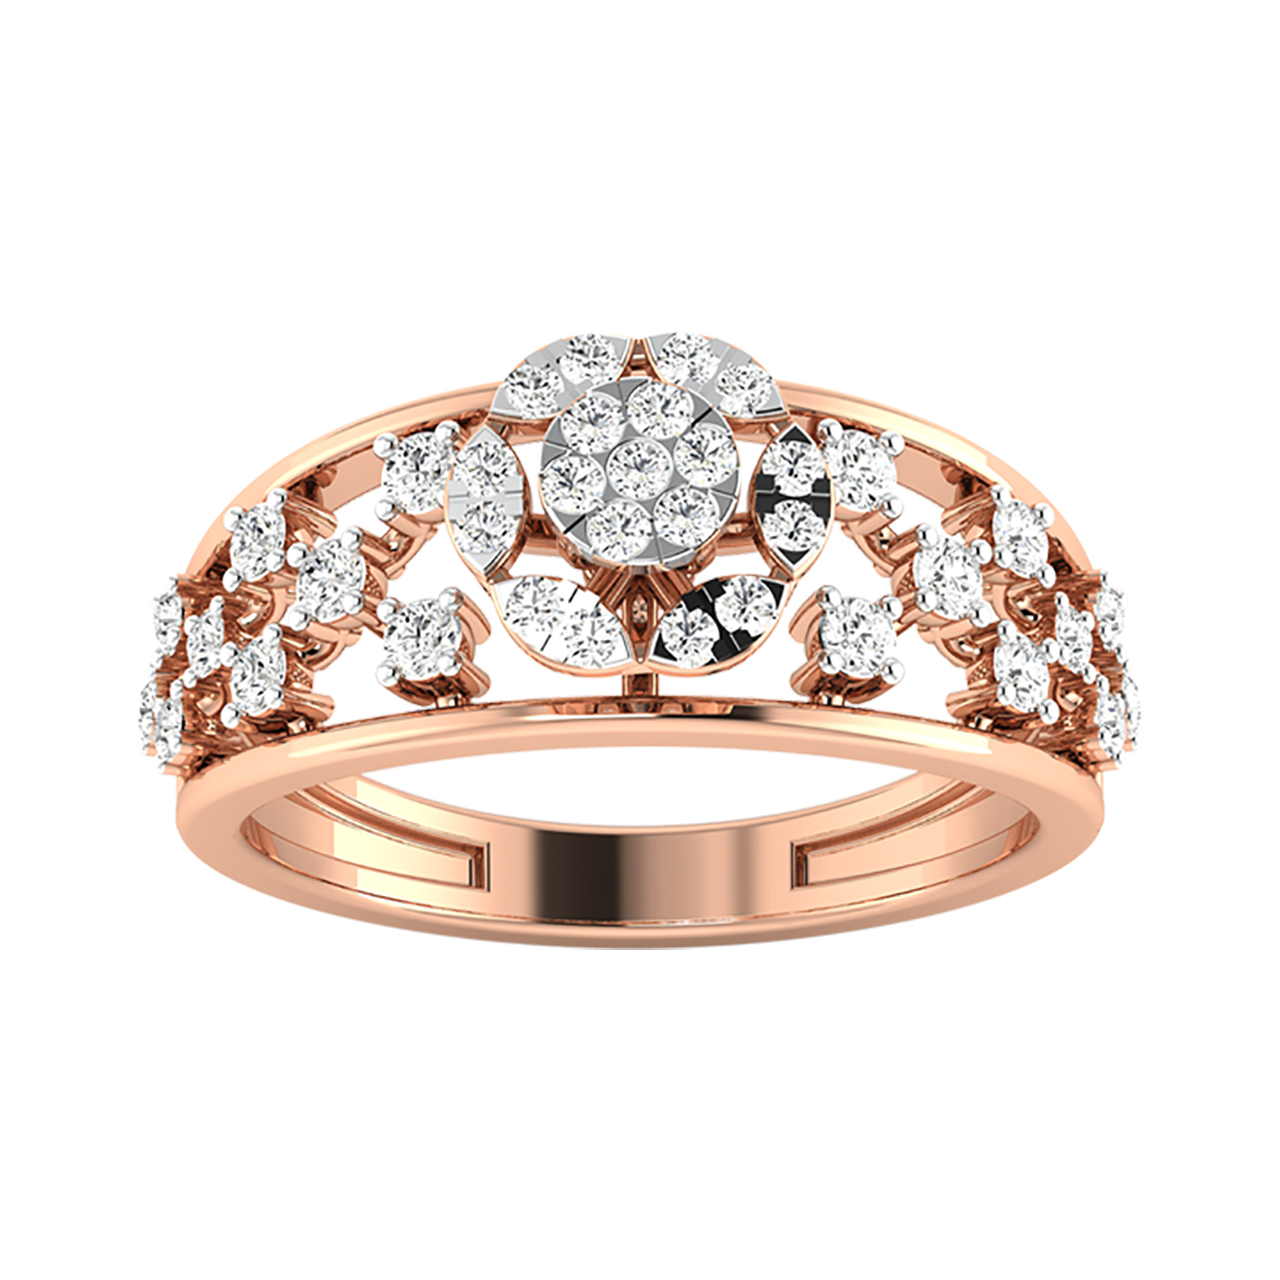 Lil Round Diamond Engagement Ring